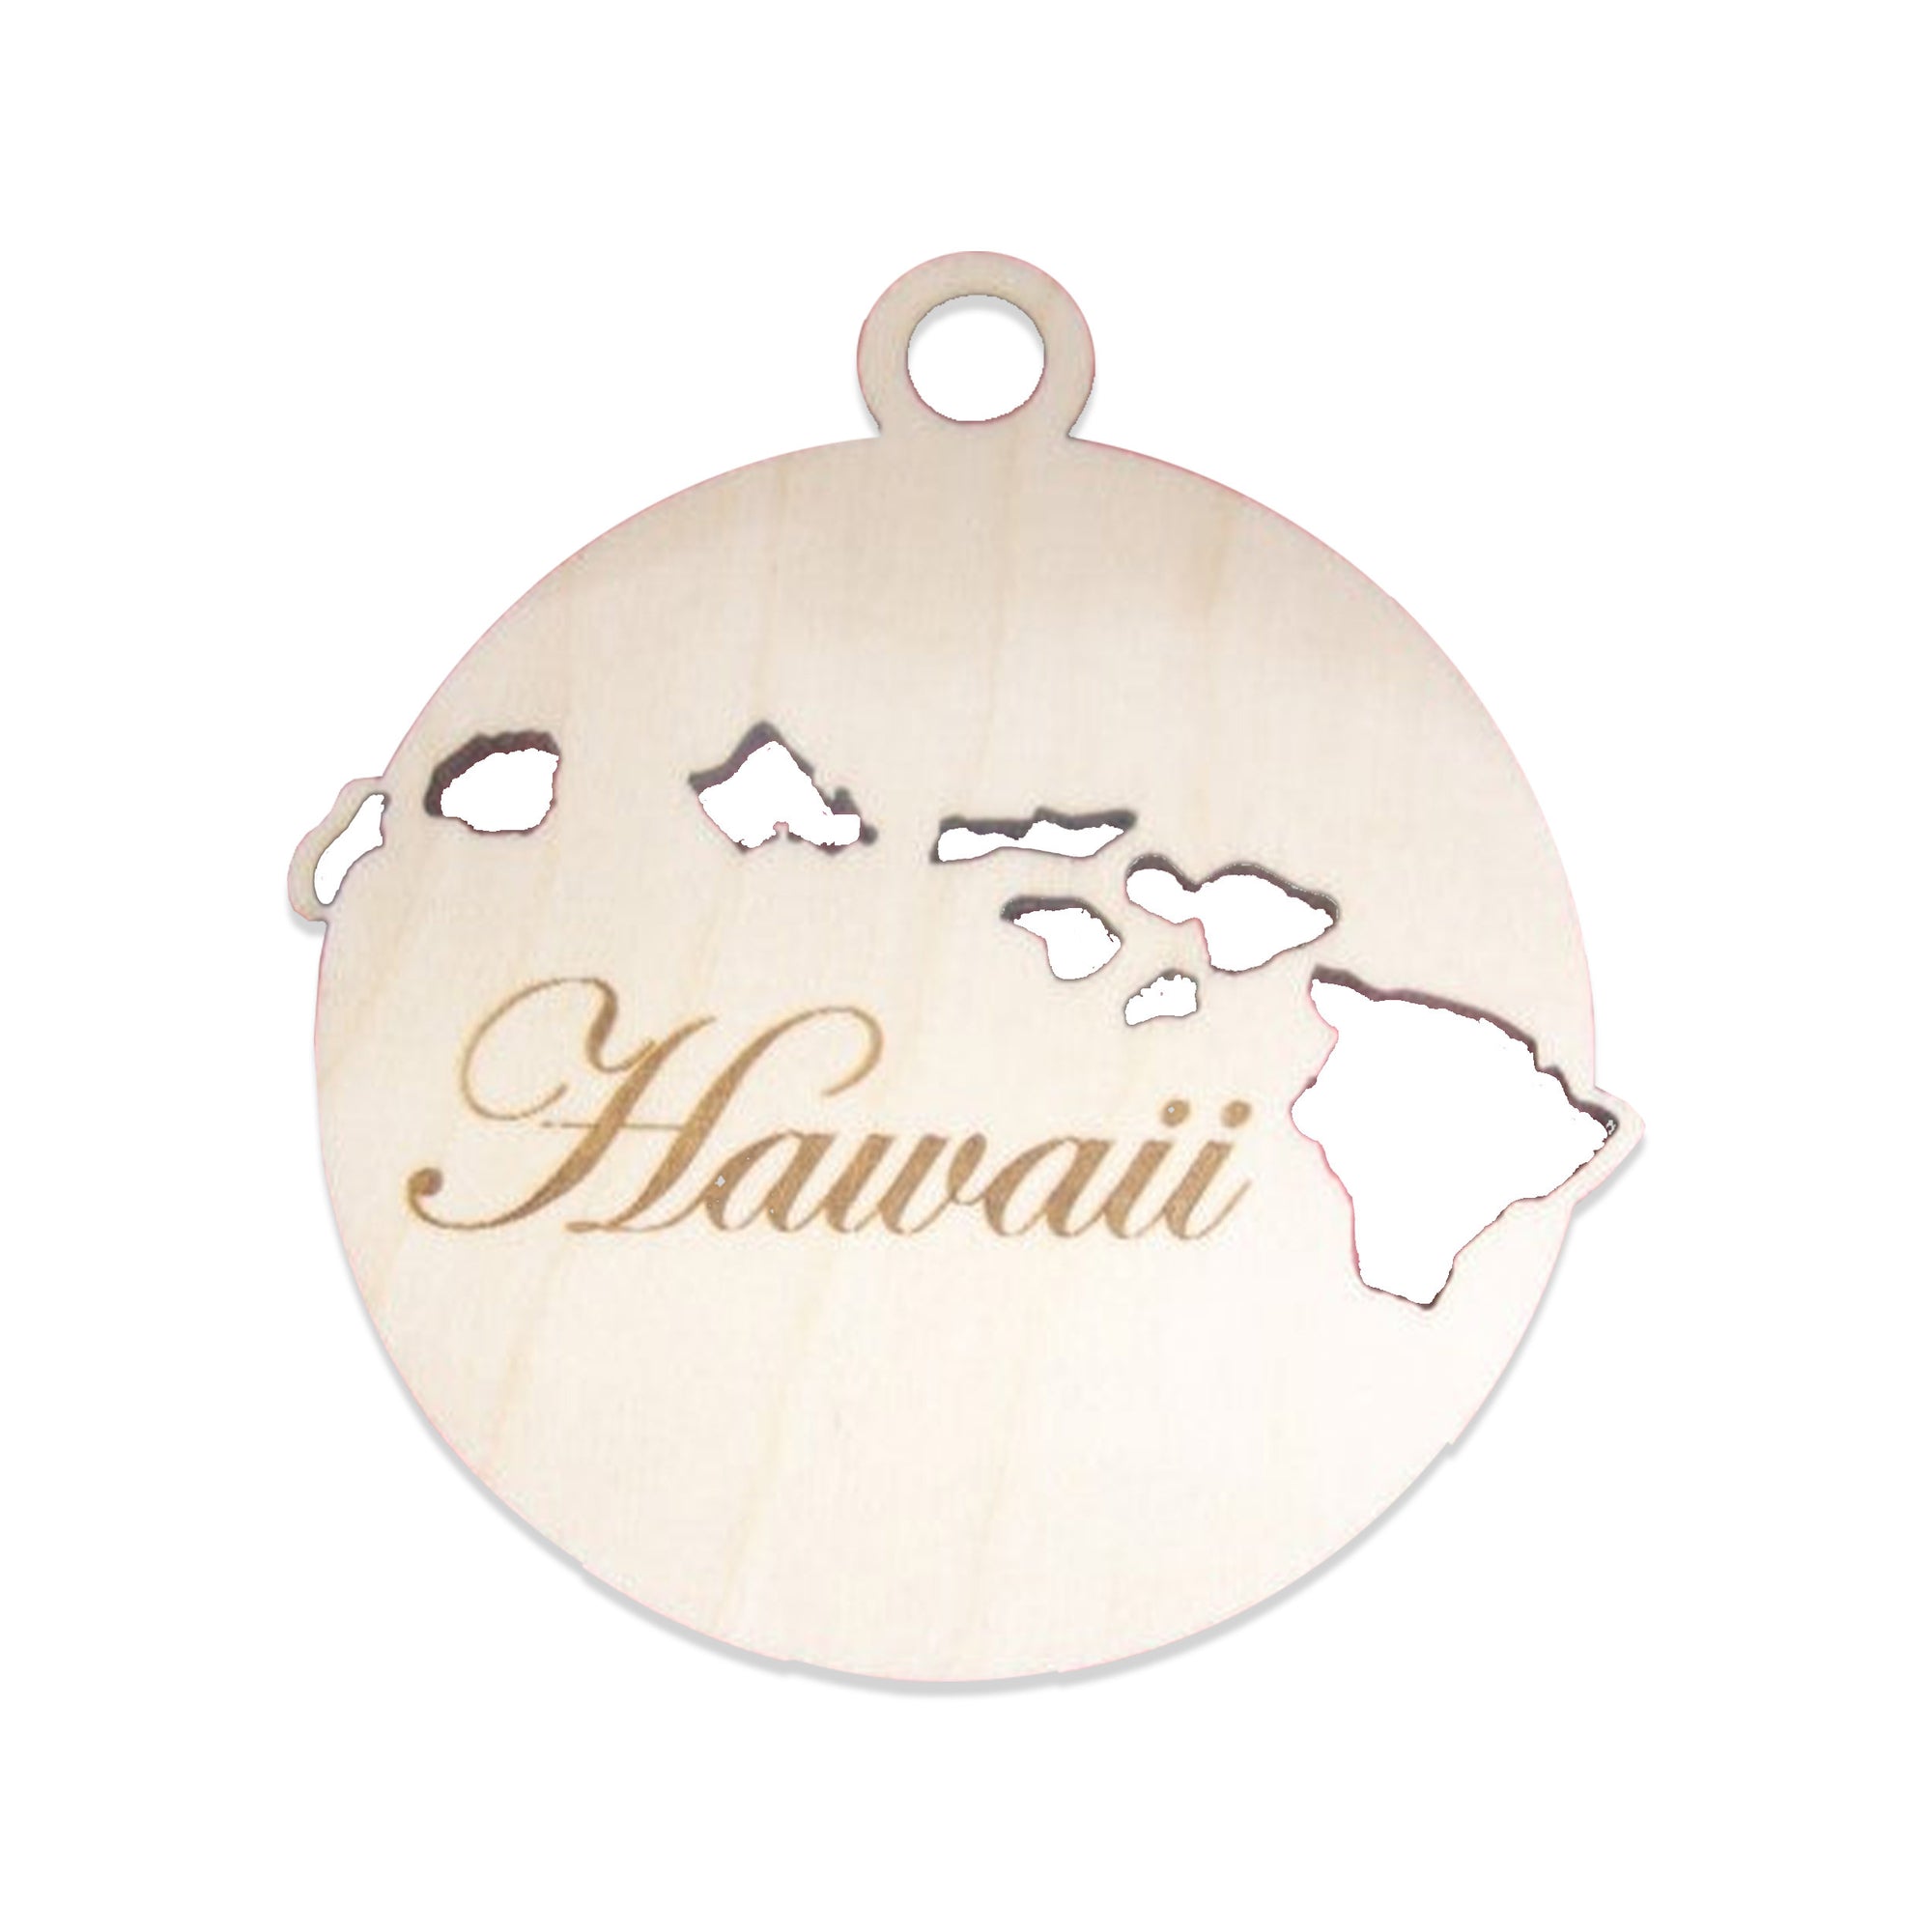 Pop-Up Mākeke - Aloha Overstock - Laser Cut Hawaiian Island Chain Wood Ornament - Front View